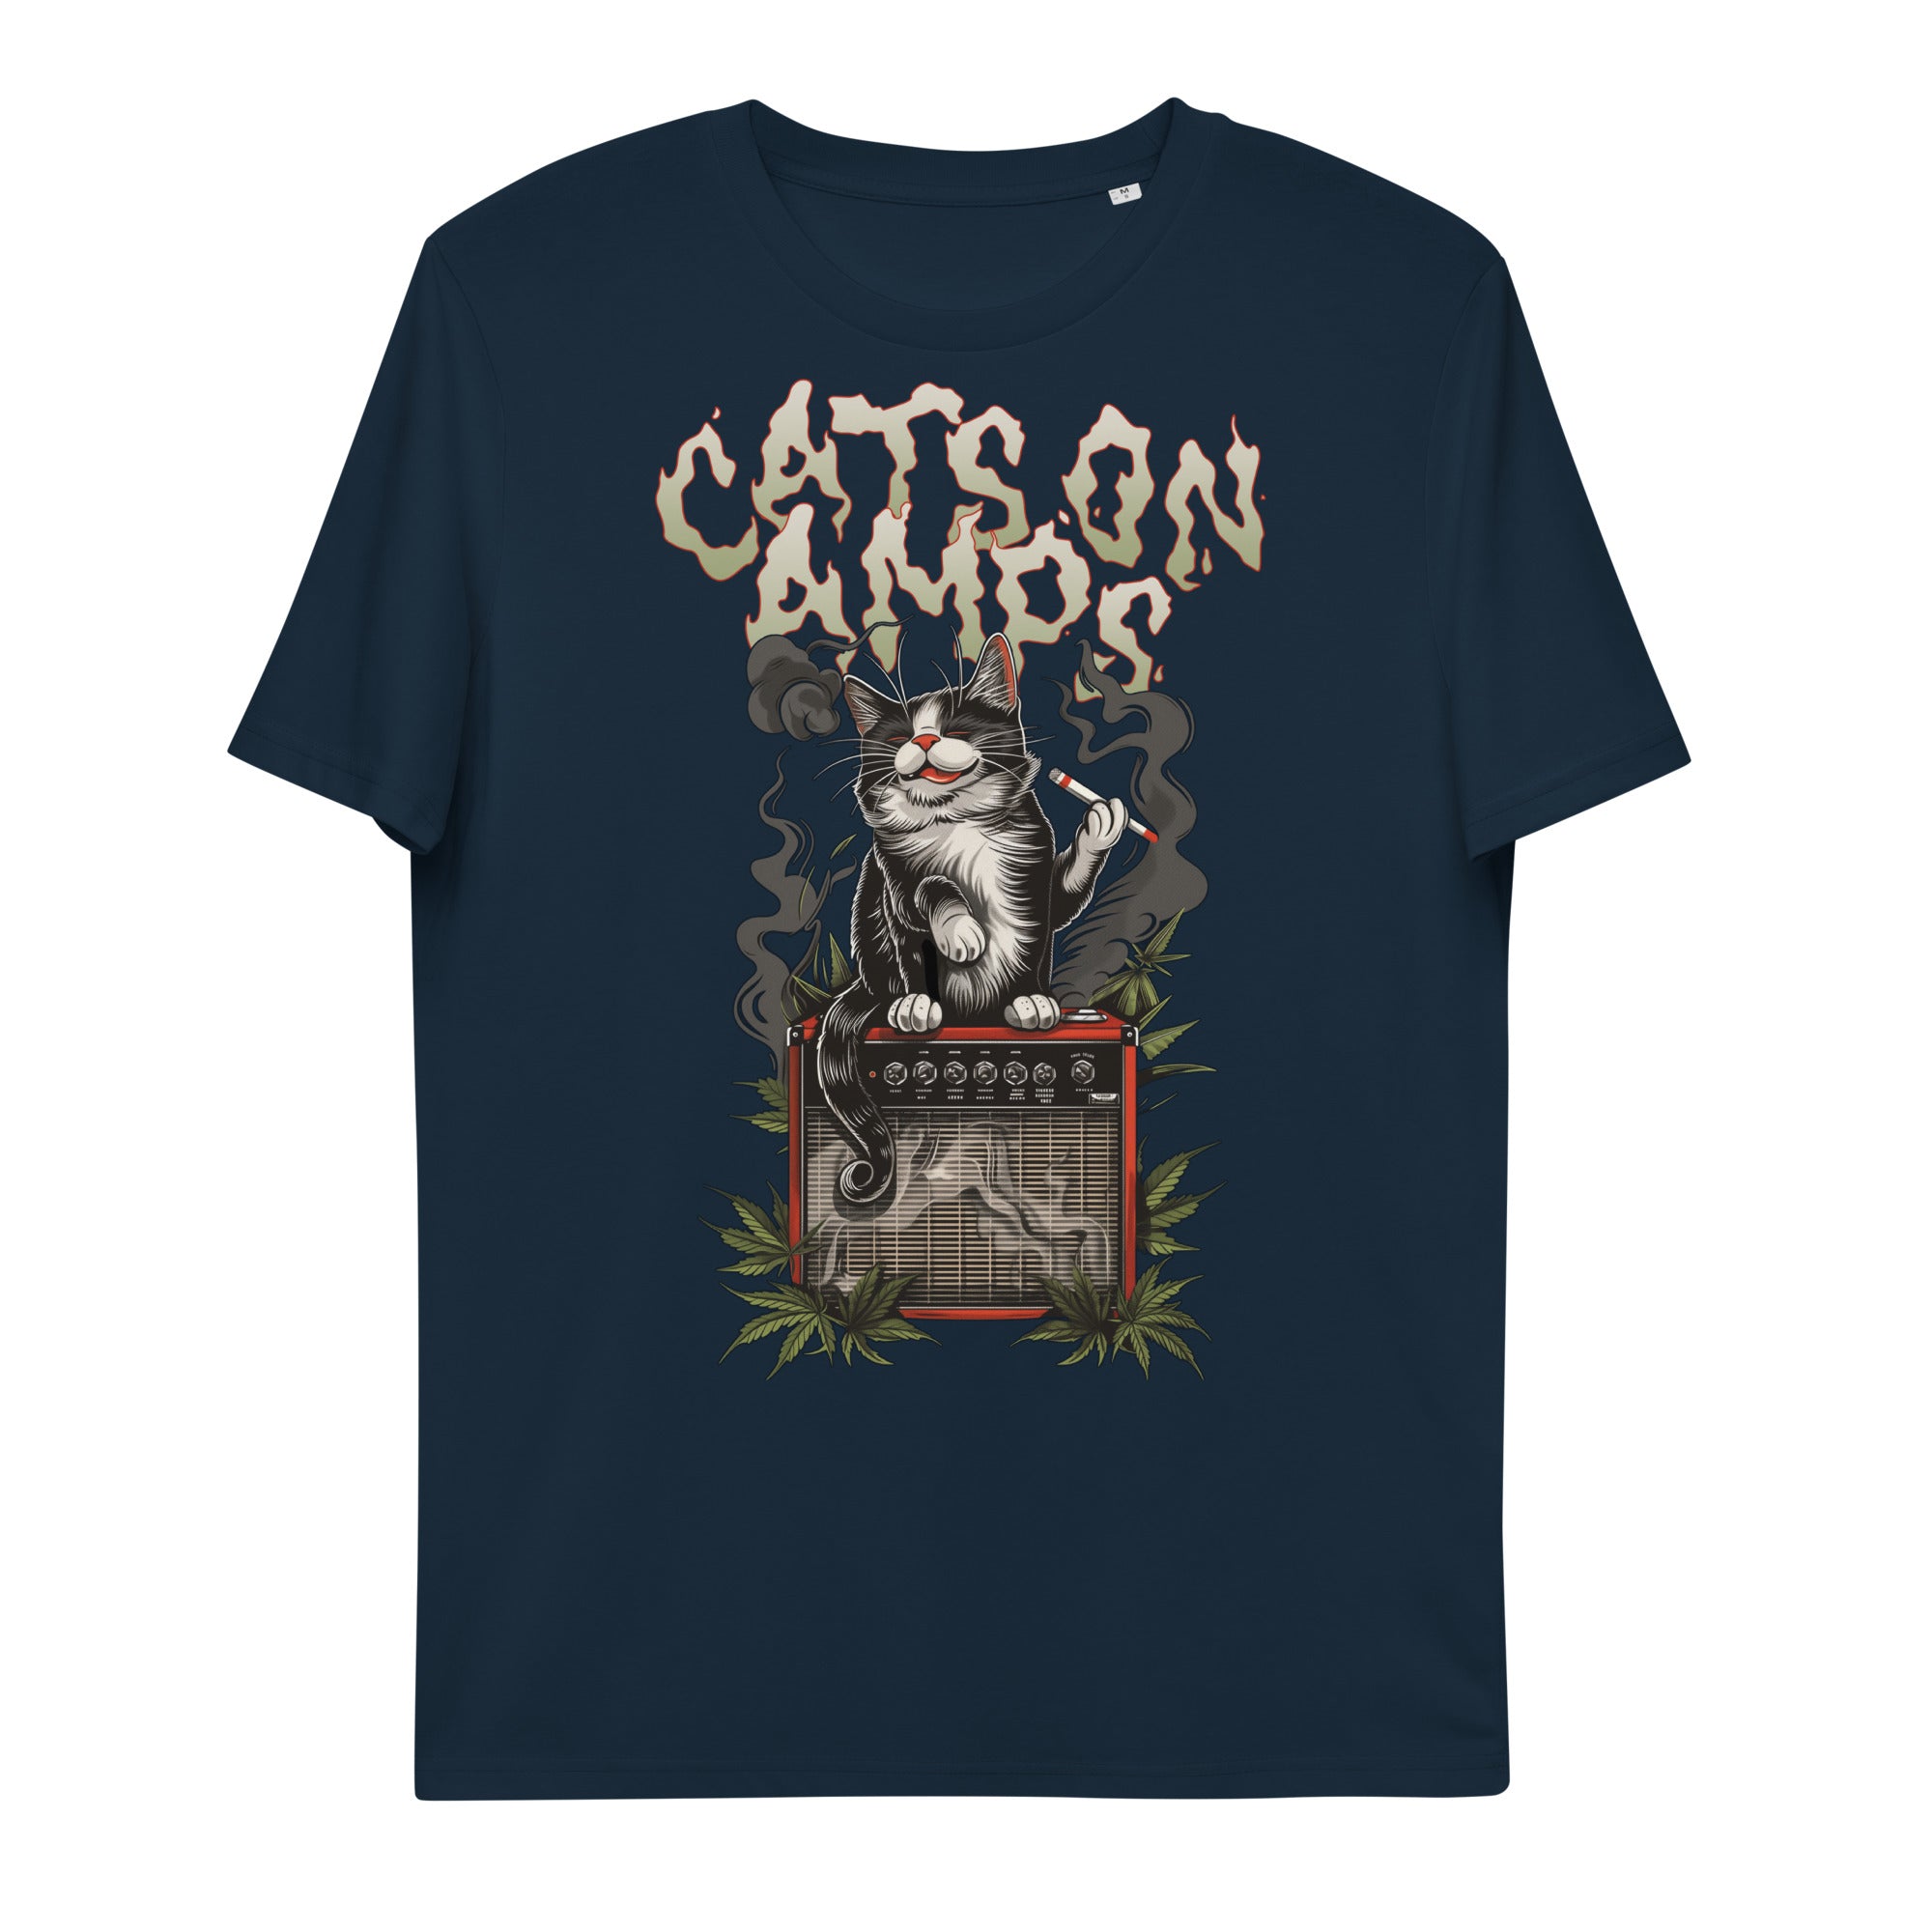 CATS ON AMPS - 420 relishing Cat - Unisex organic cotton t-shirt